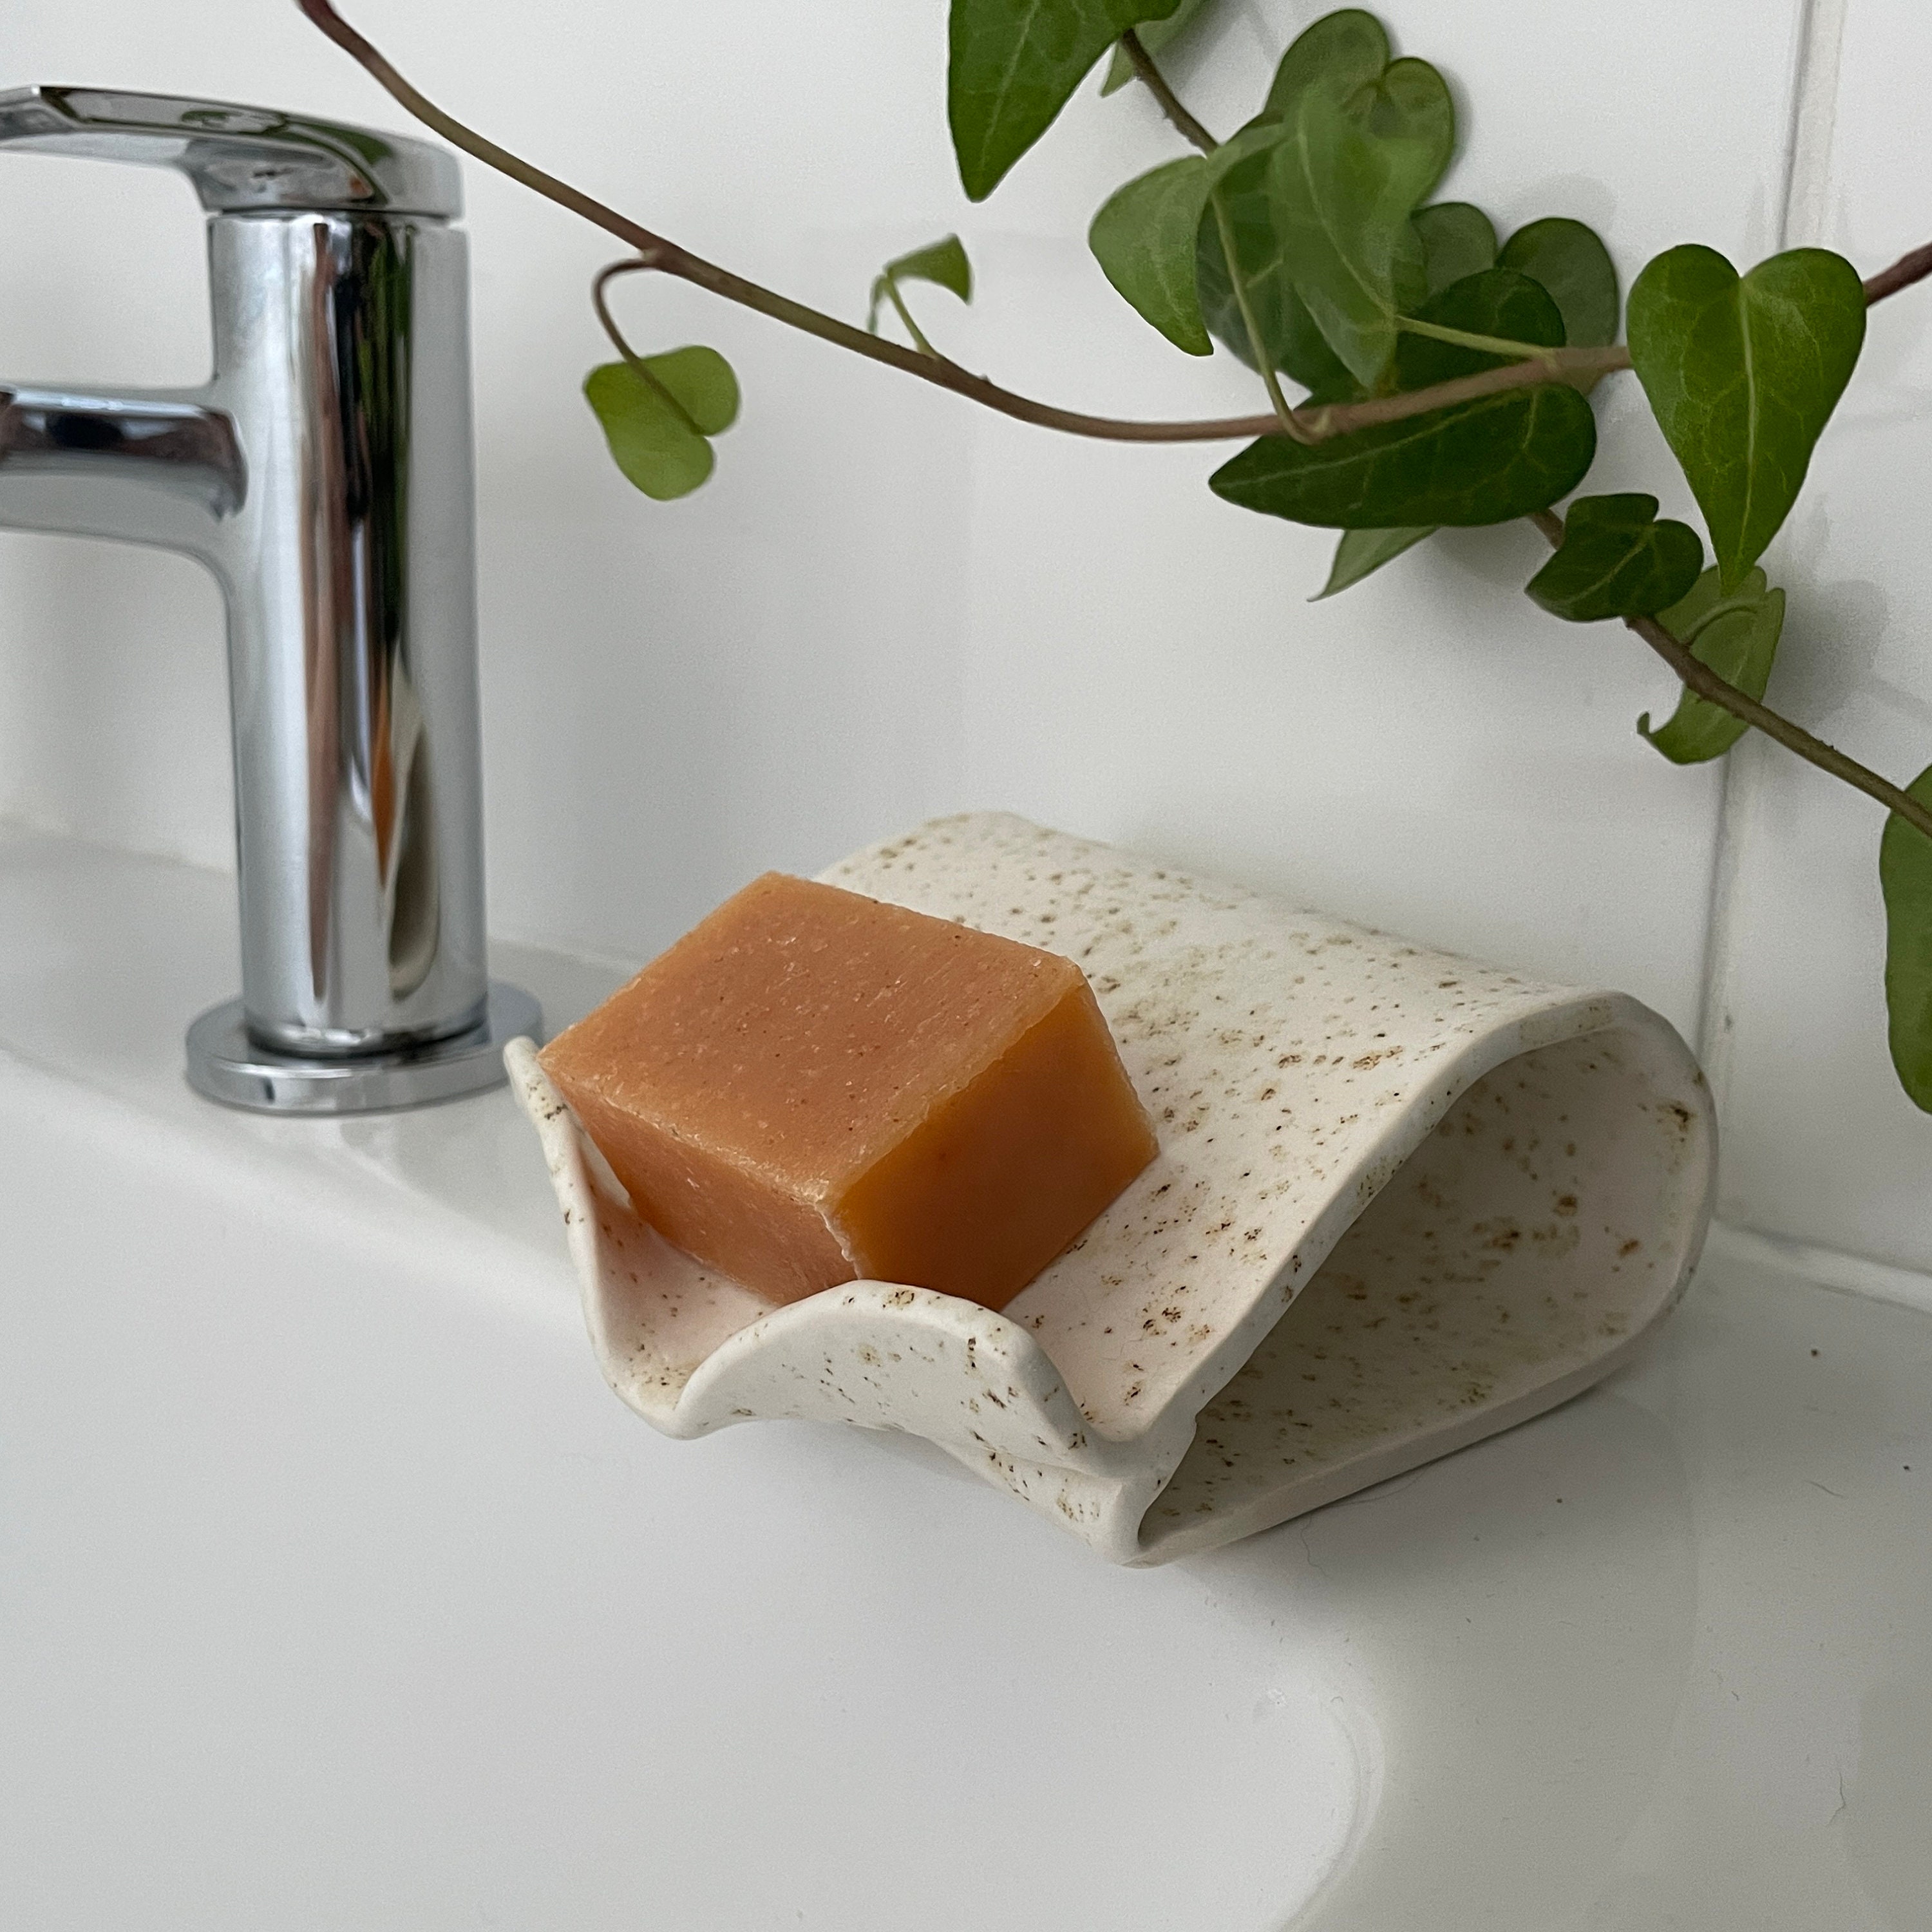 Handmade Self-draining Ceramic Soap Dish. Sink Draining Soap